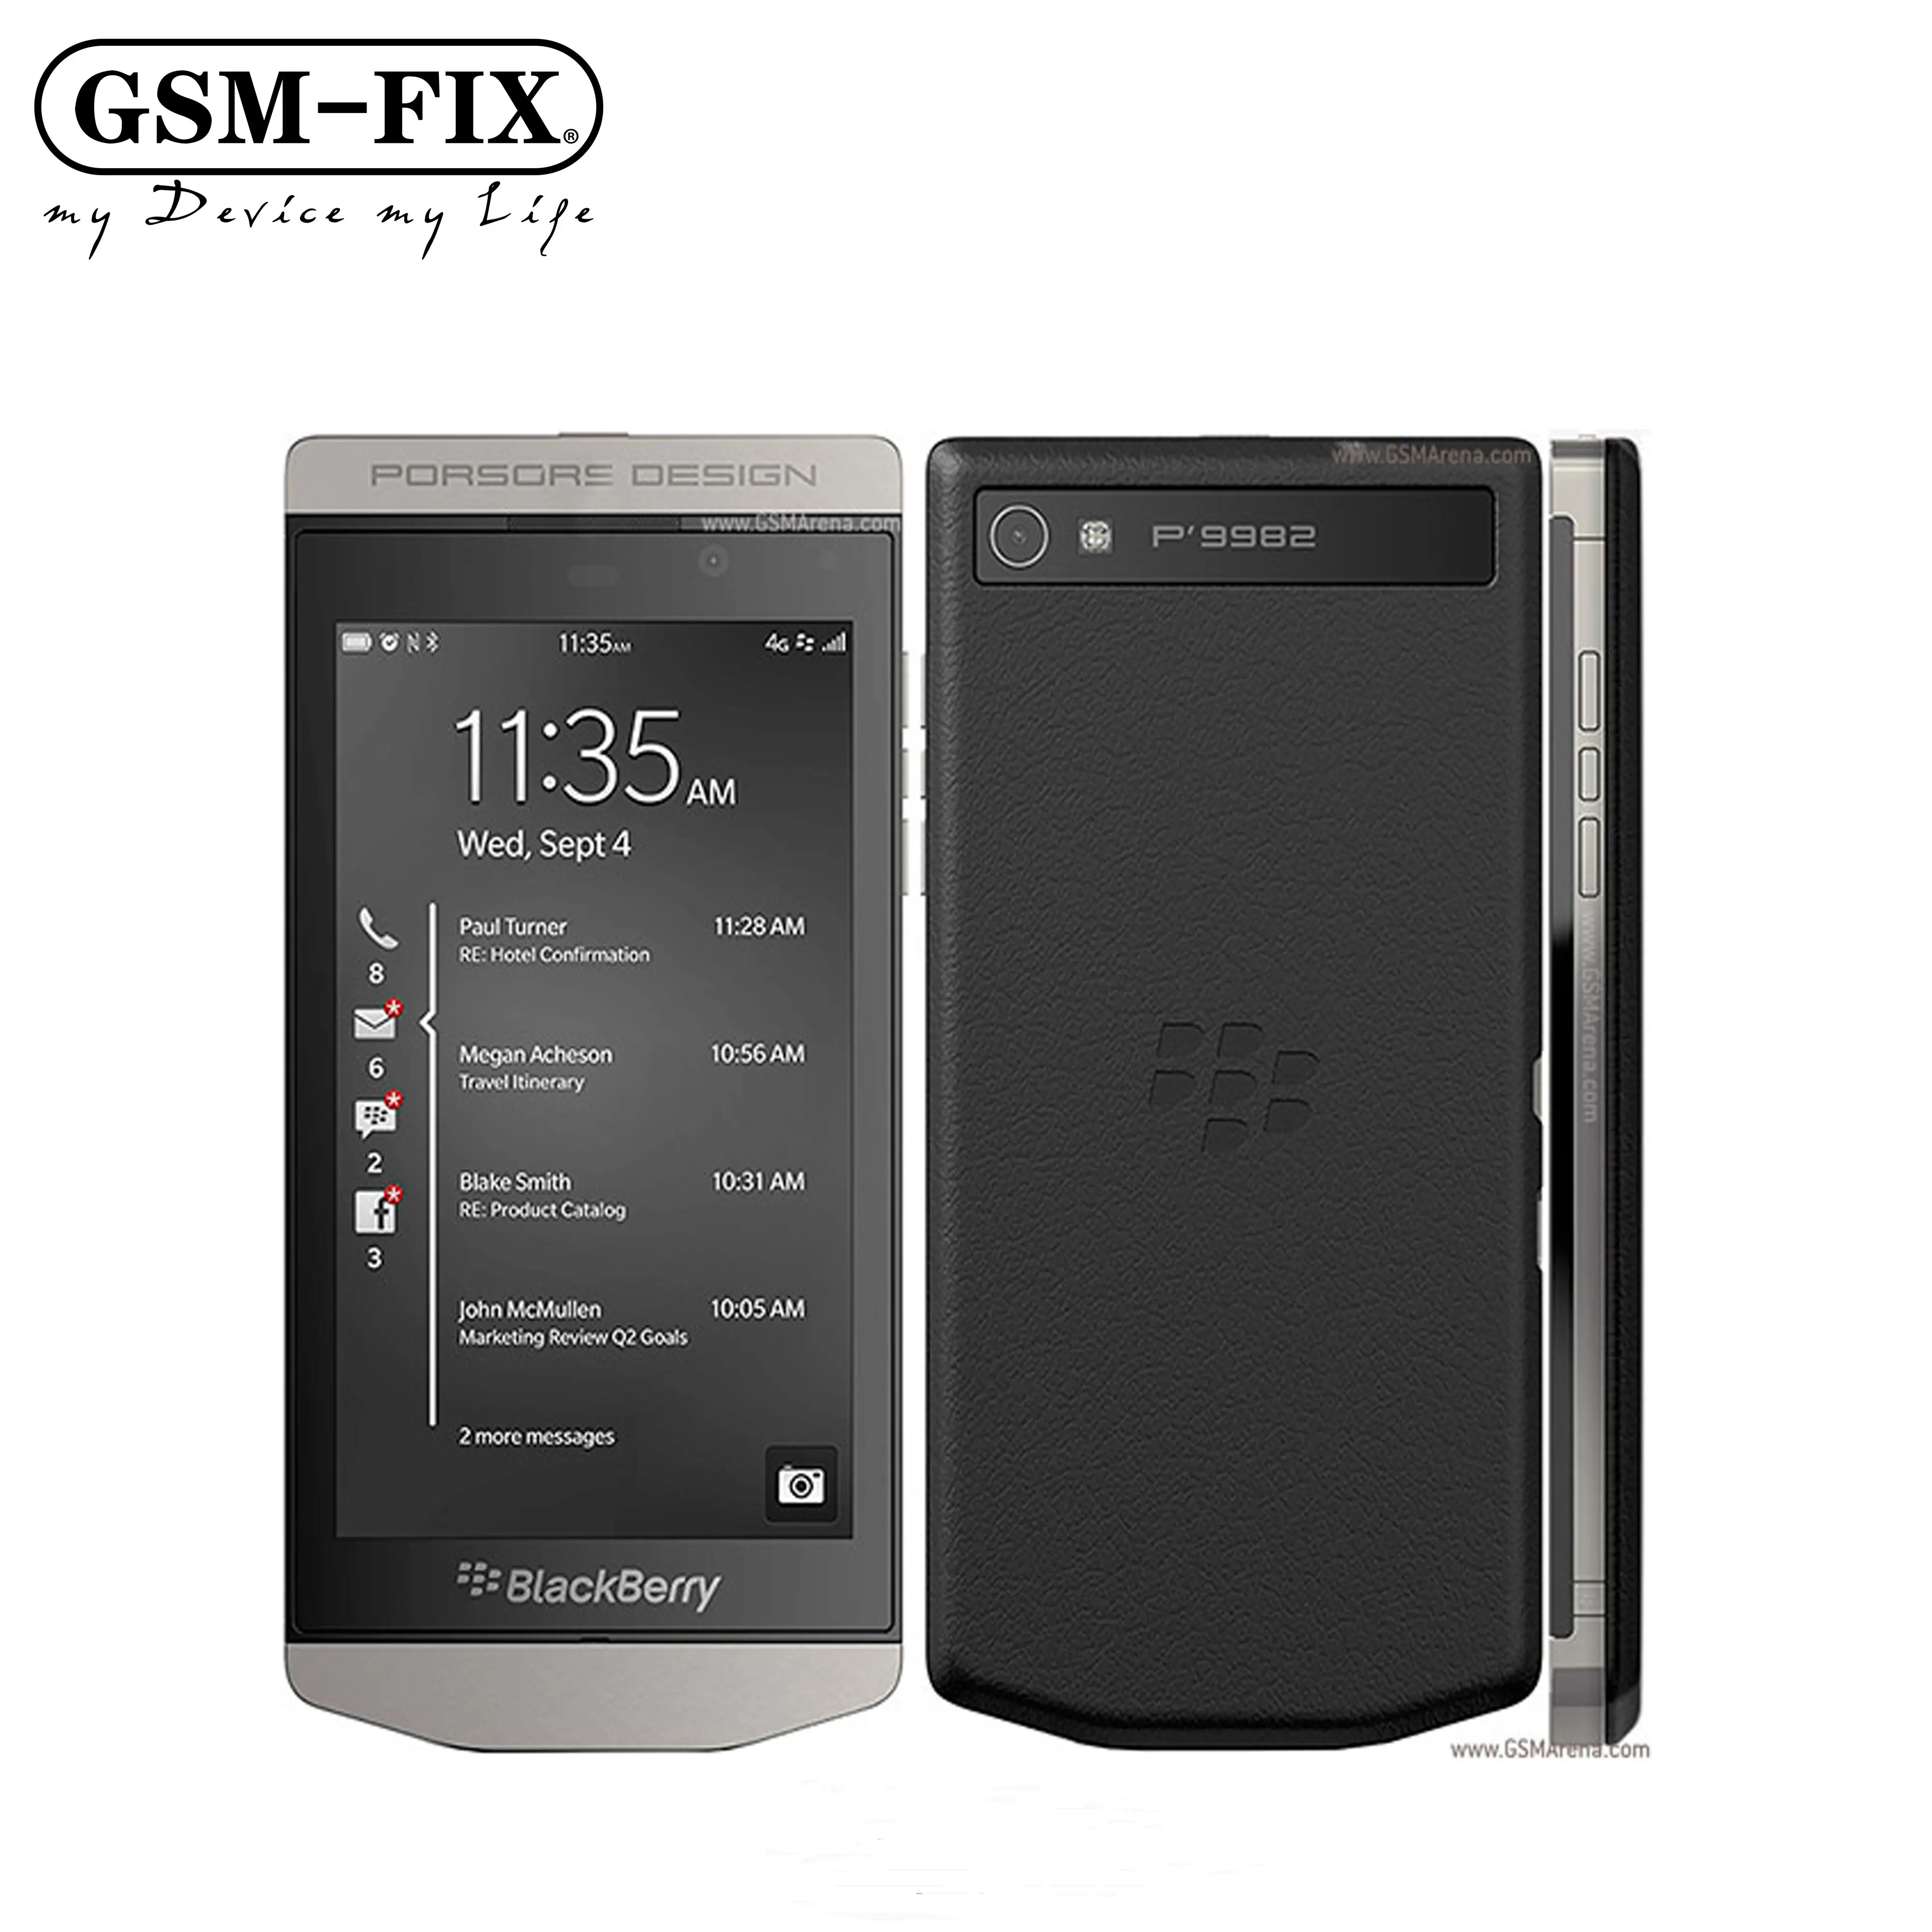 Teléfono móvil 4G LTE para BlackBerry Porsche Design P'9982, teléfono inteligente IPS LCD de 4,2 pulgadas, teléfono móvil Snapdragon S4 Pro